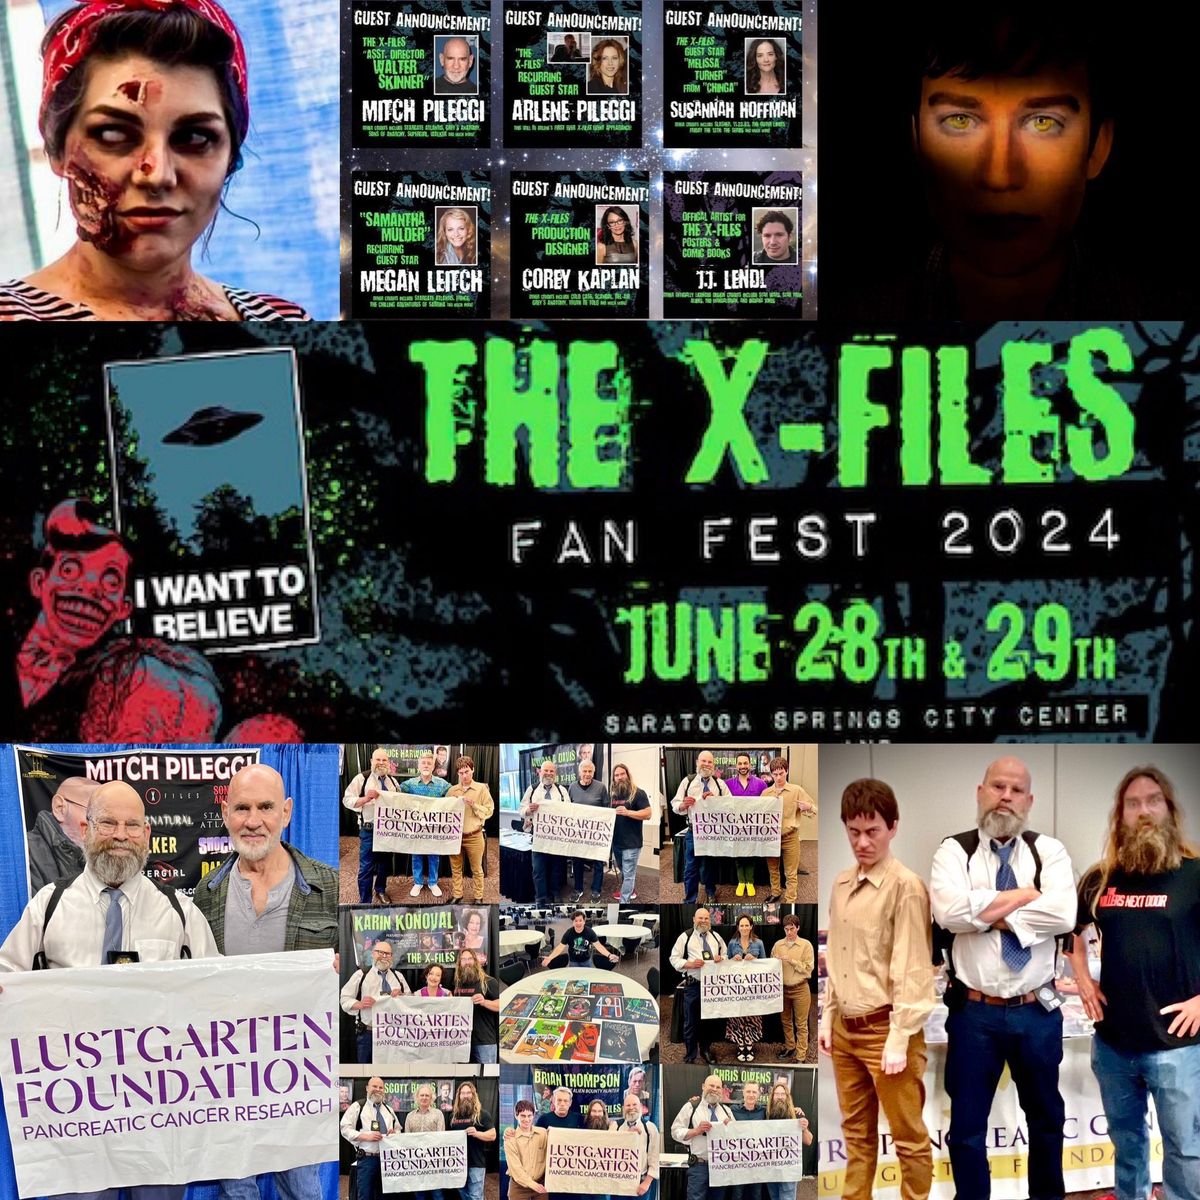 Zombie Leader fundraises for Lustgarten at X-Files Fan Fest 2024